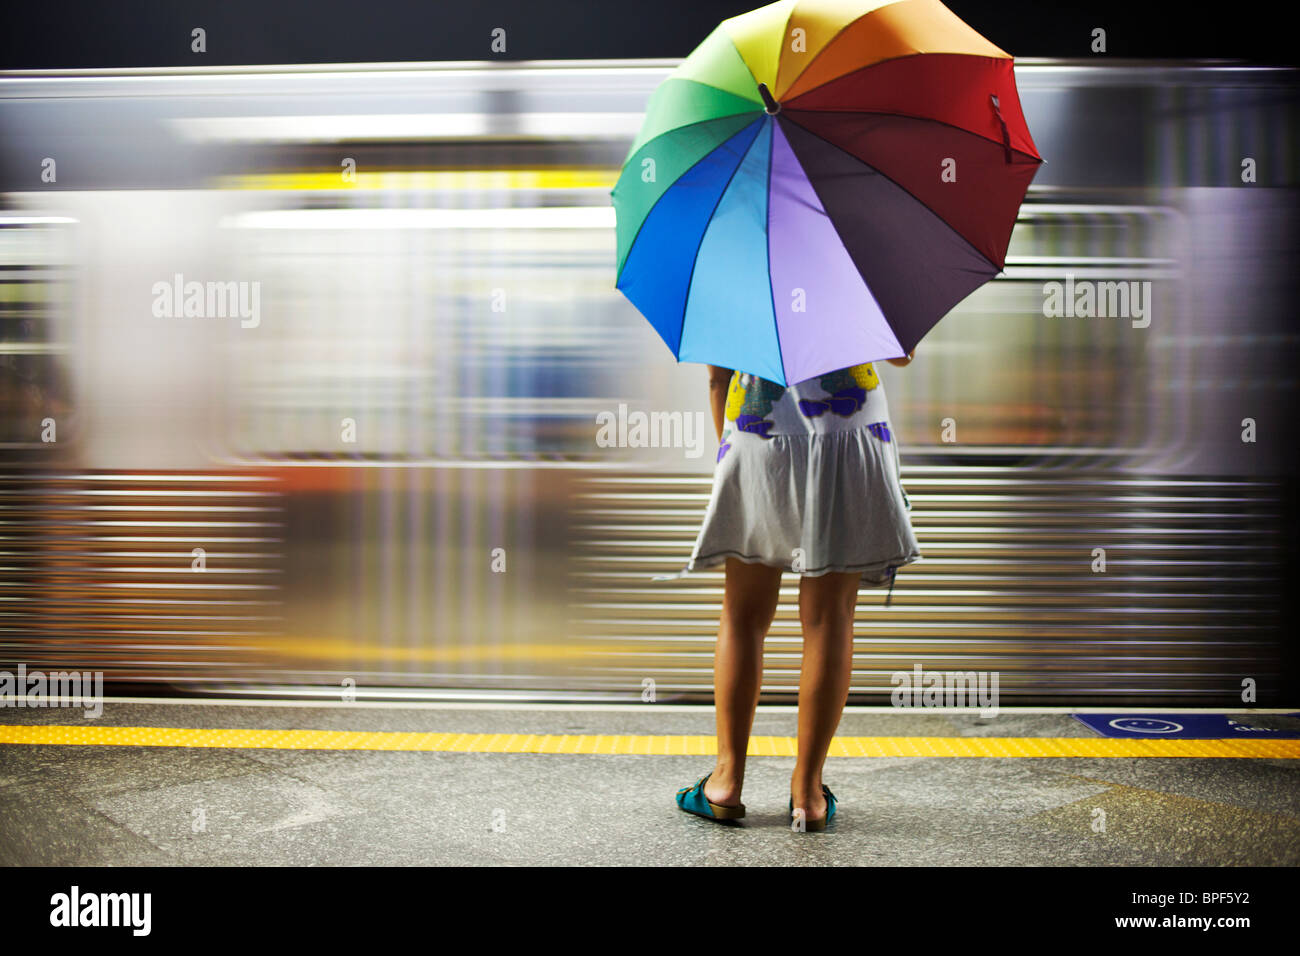 Mixed race woman with umbrella on train platform Stock Photo